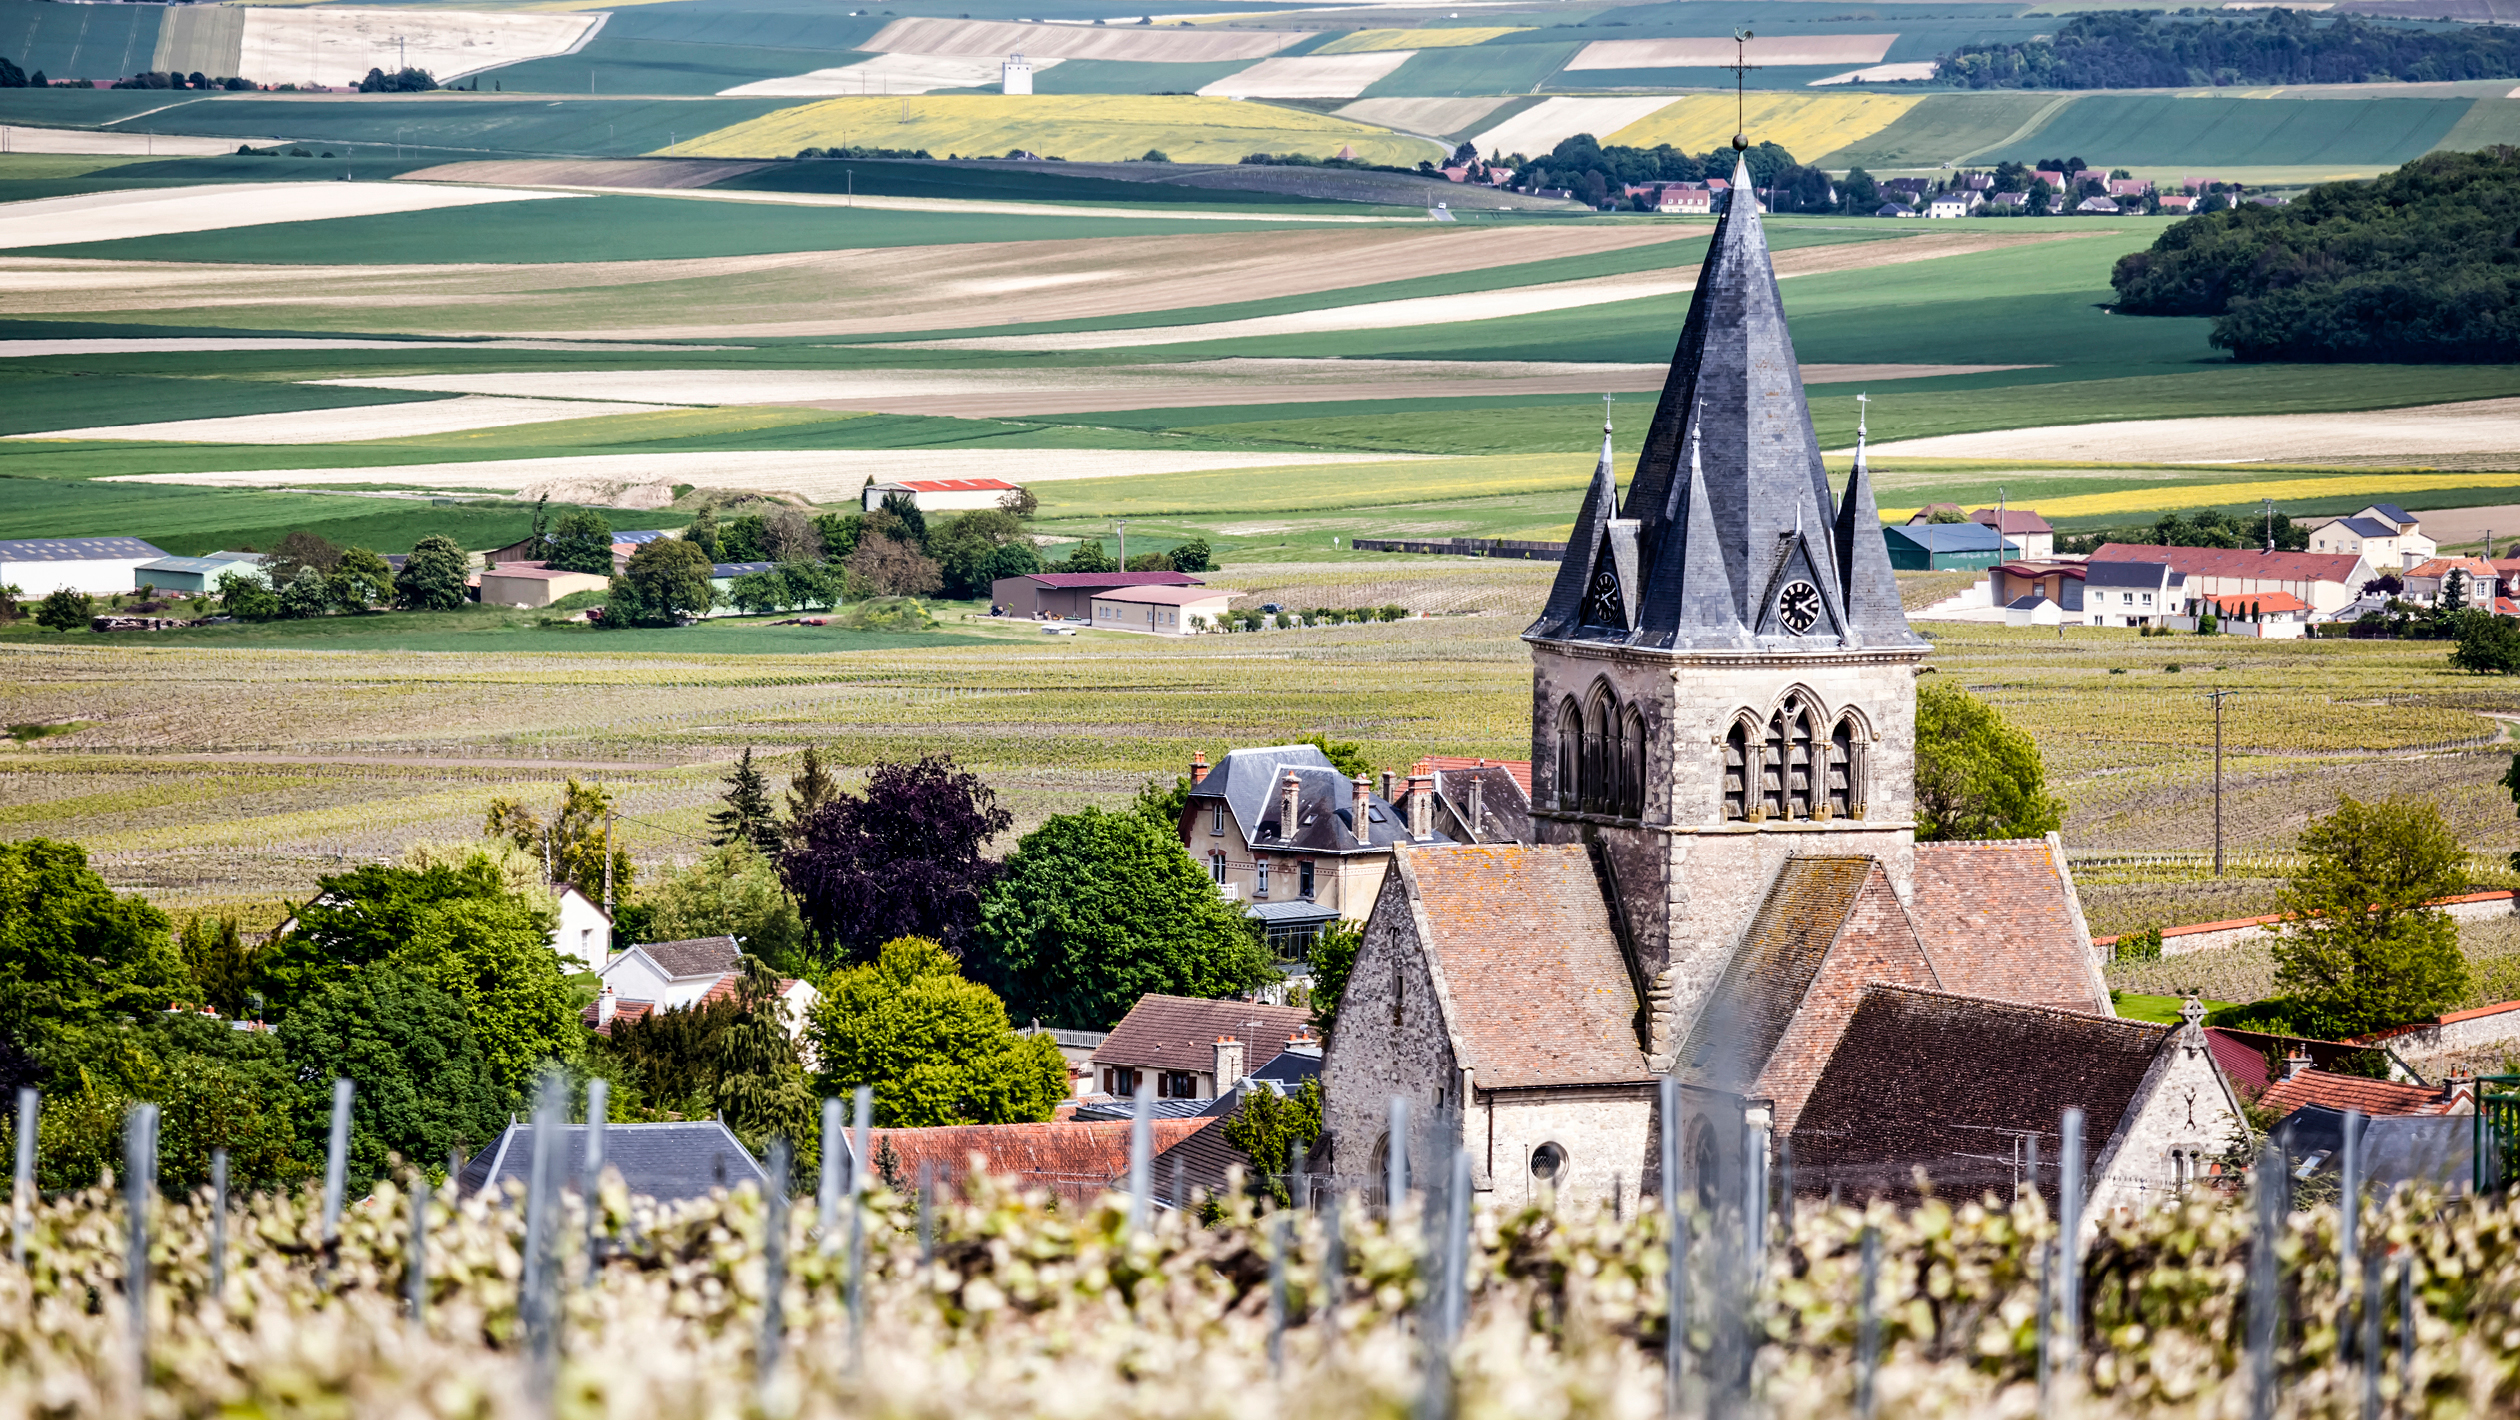 A journey through France's Champagne-Ardenne region